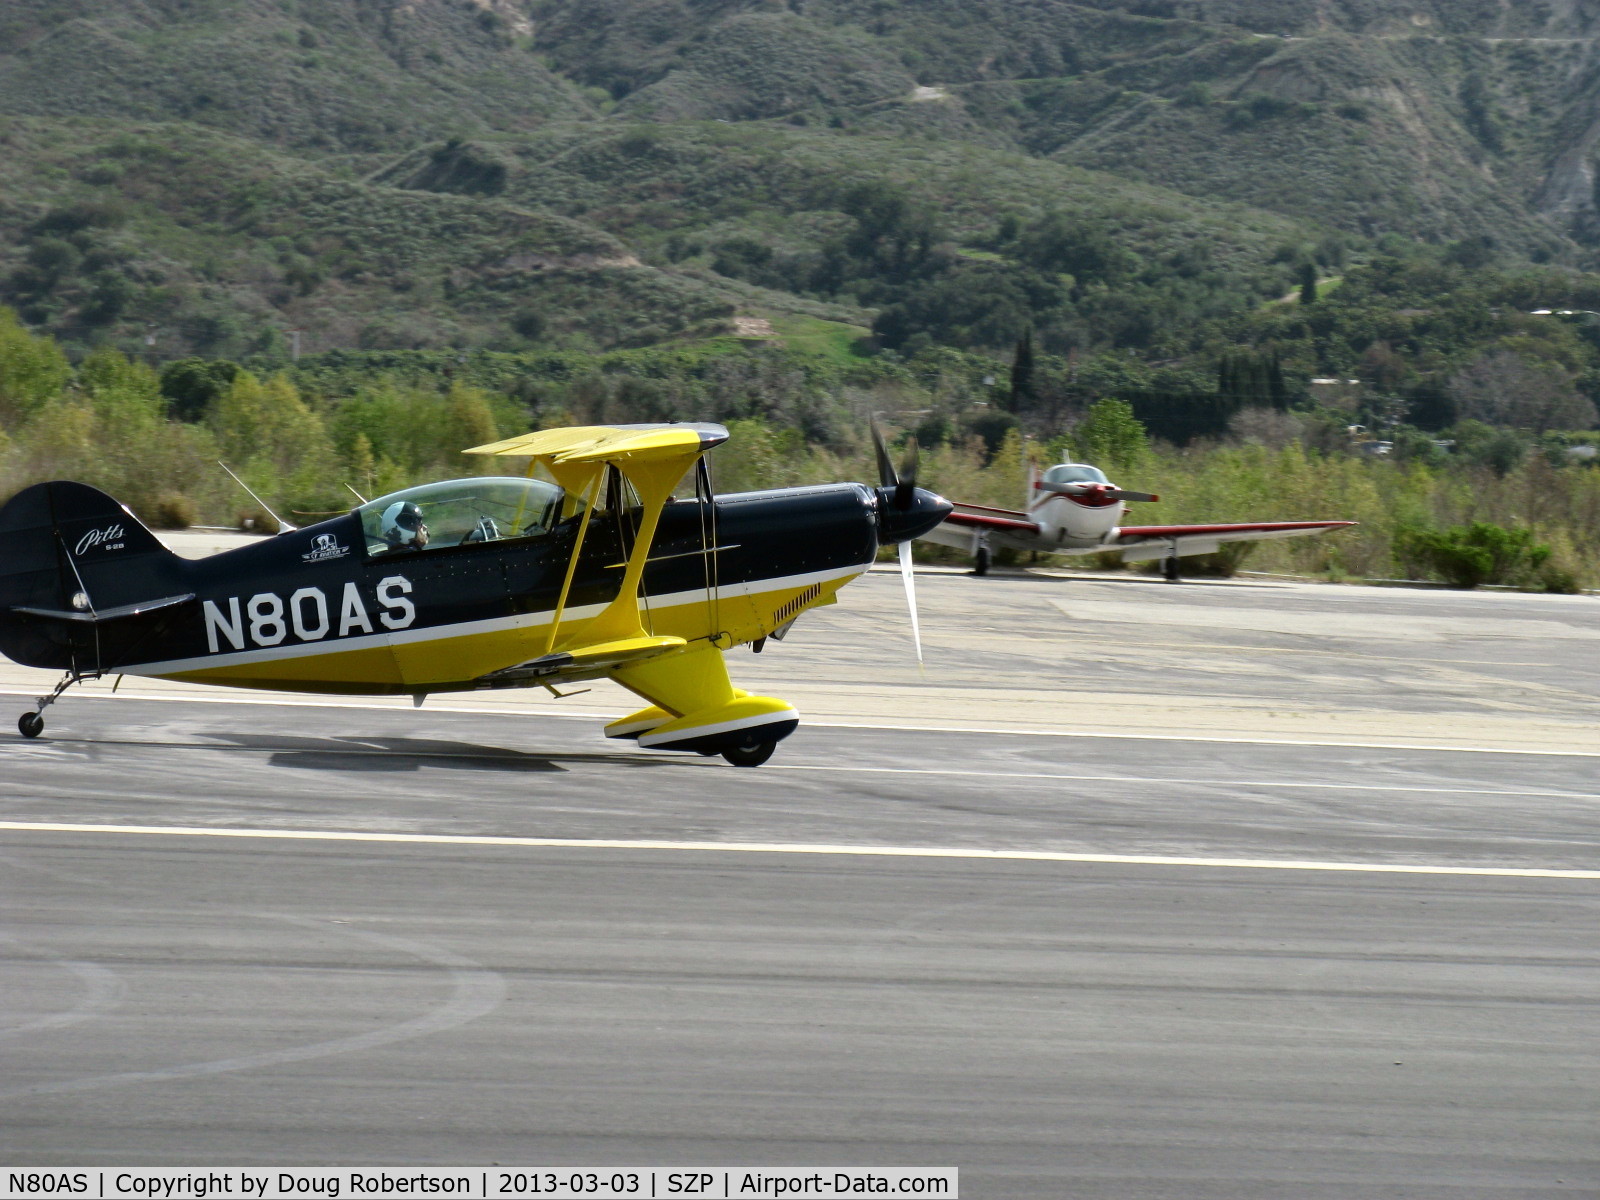 N80AS, 1992 Pitts S-2B Special C/N 5244, 1992 Pitts Aerobatics S-2B, Lycoming AEIO-540-D4A5 260 Hp, landing roll Rwy 22